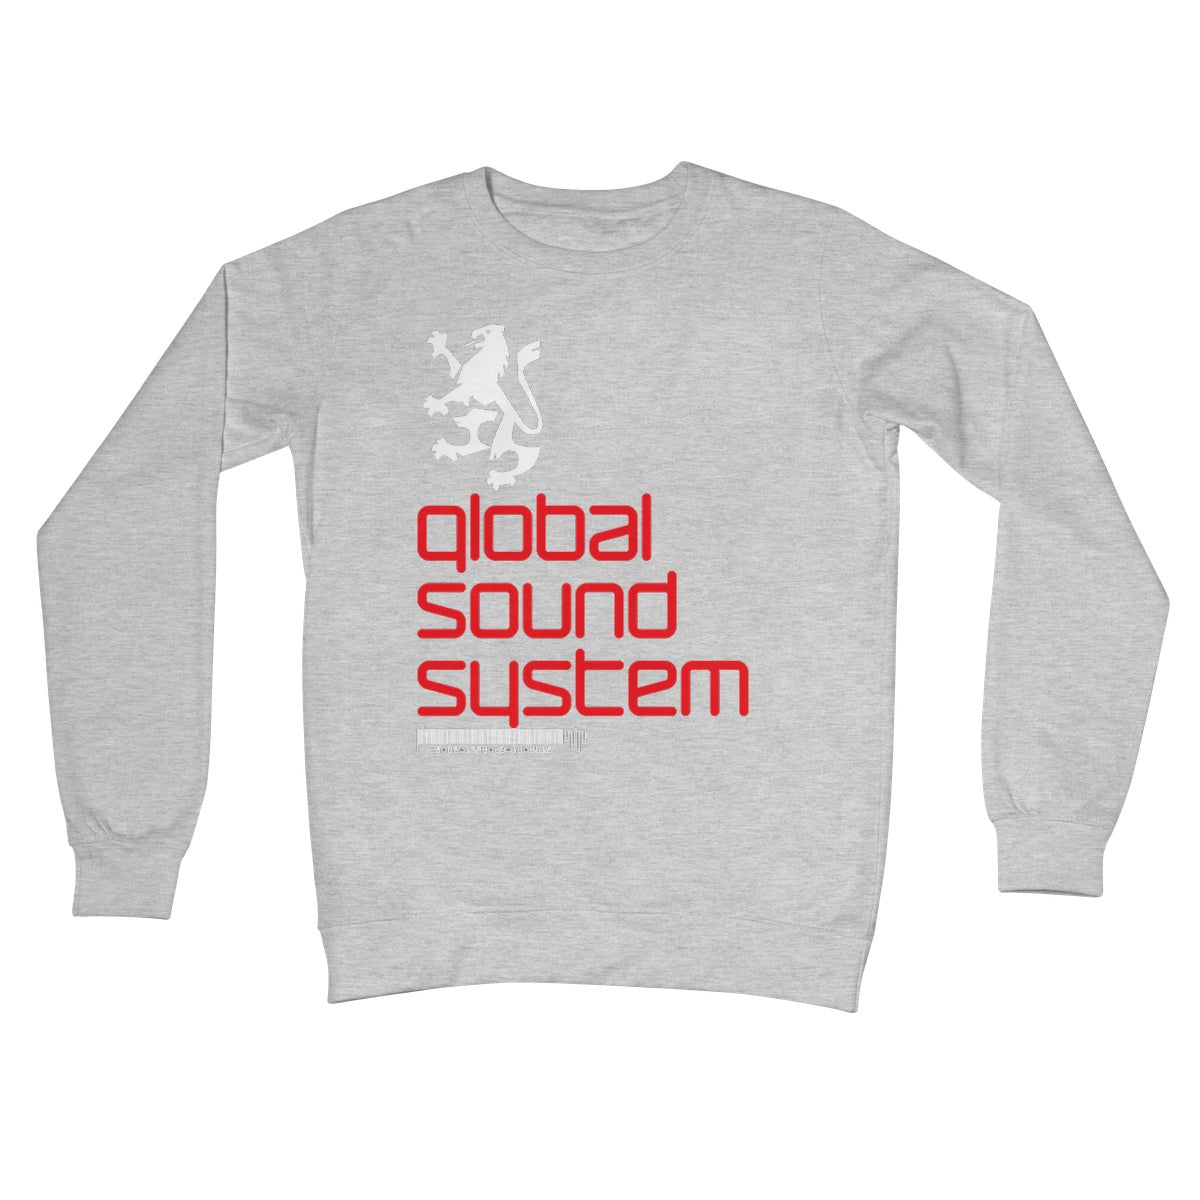 Global Sound System Sweatshirt